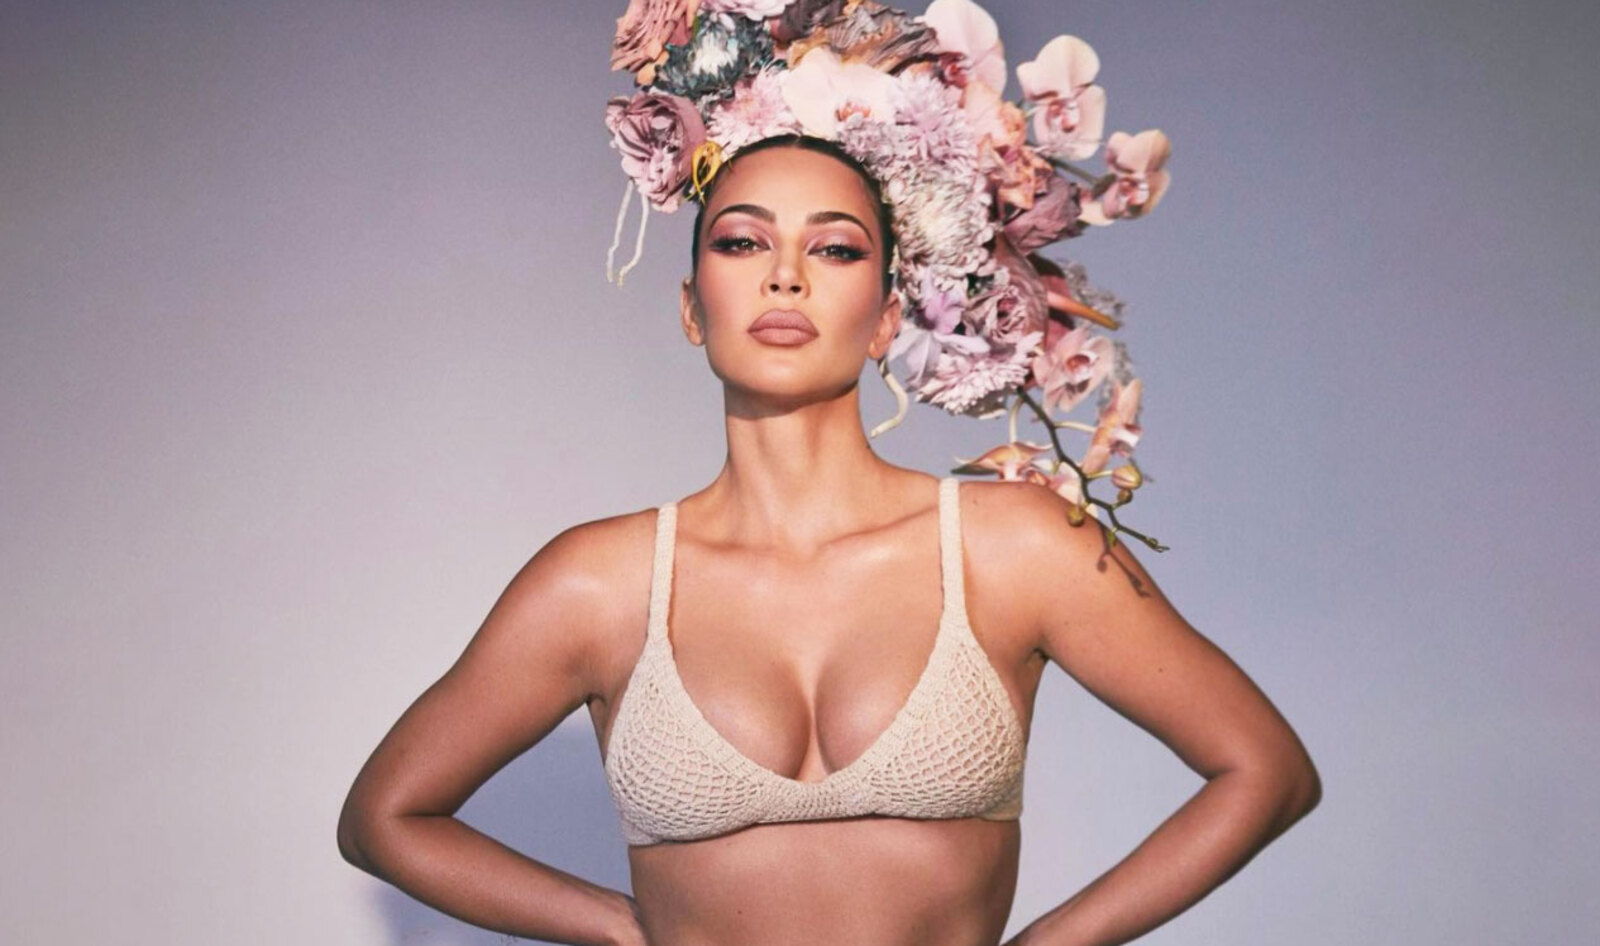 Kim Kardashian Tells 205 Million Fans “Plant-Based Does A Body Good”